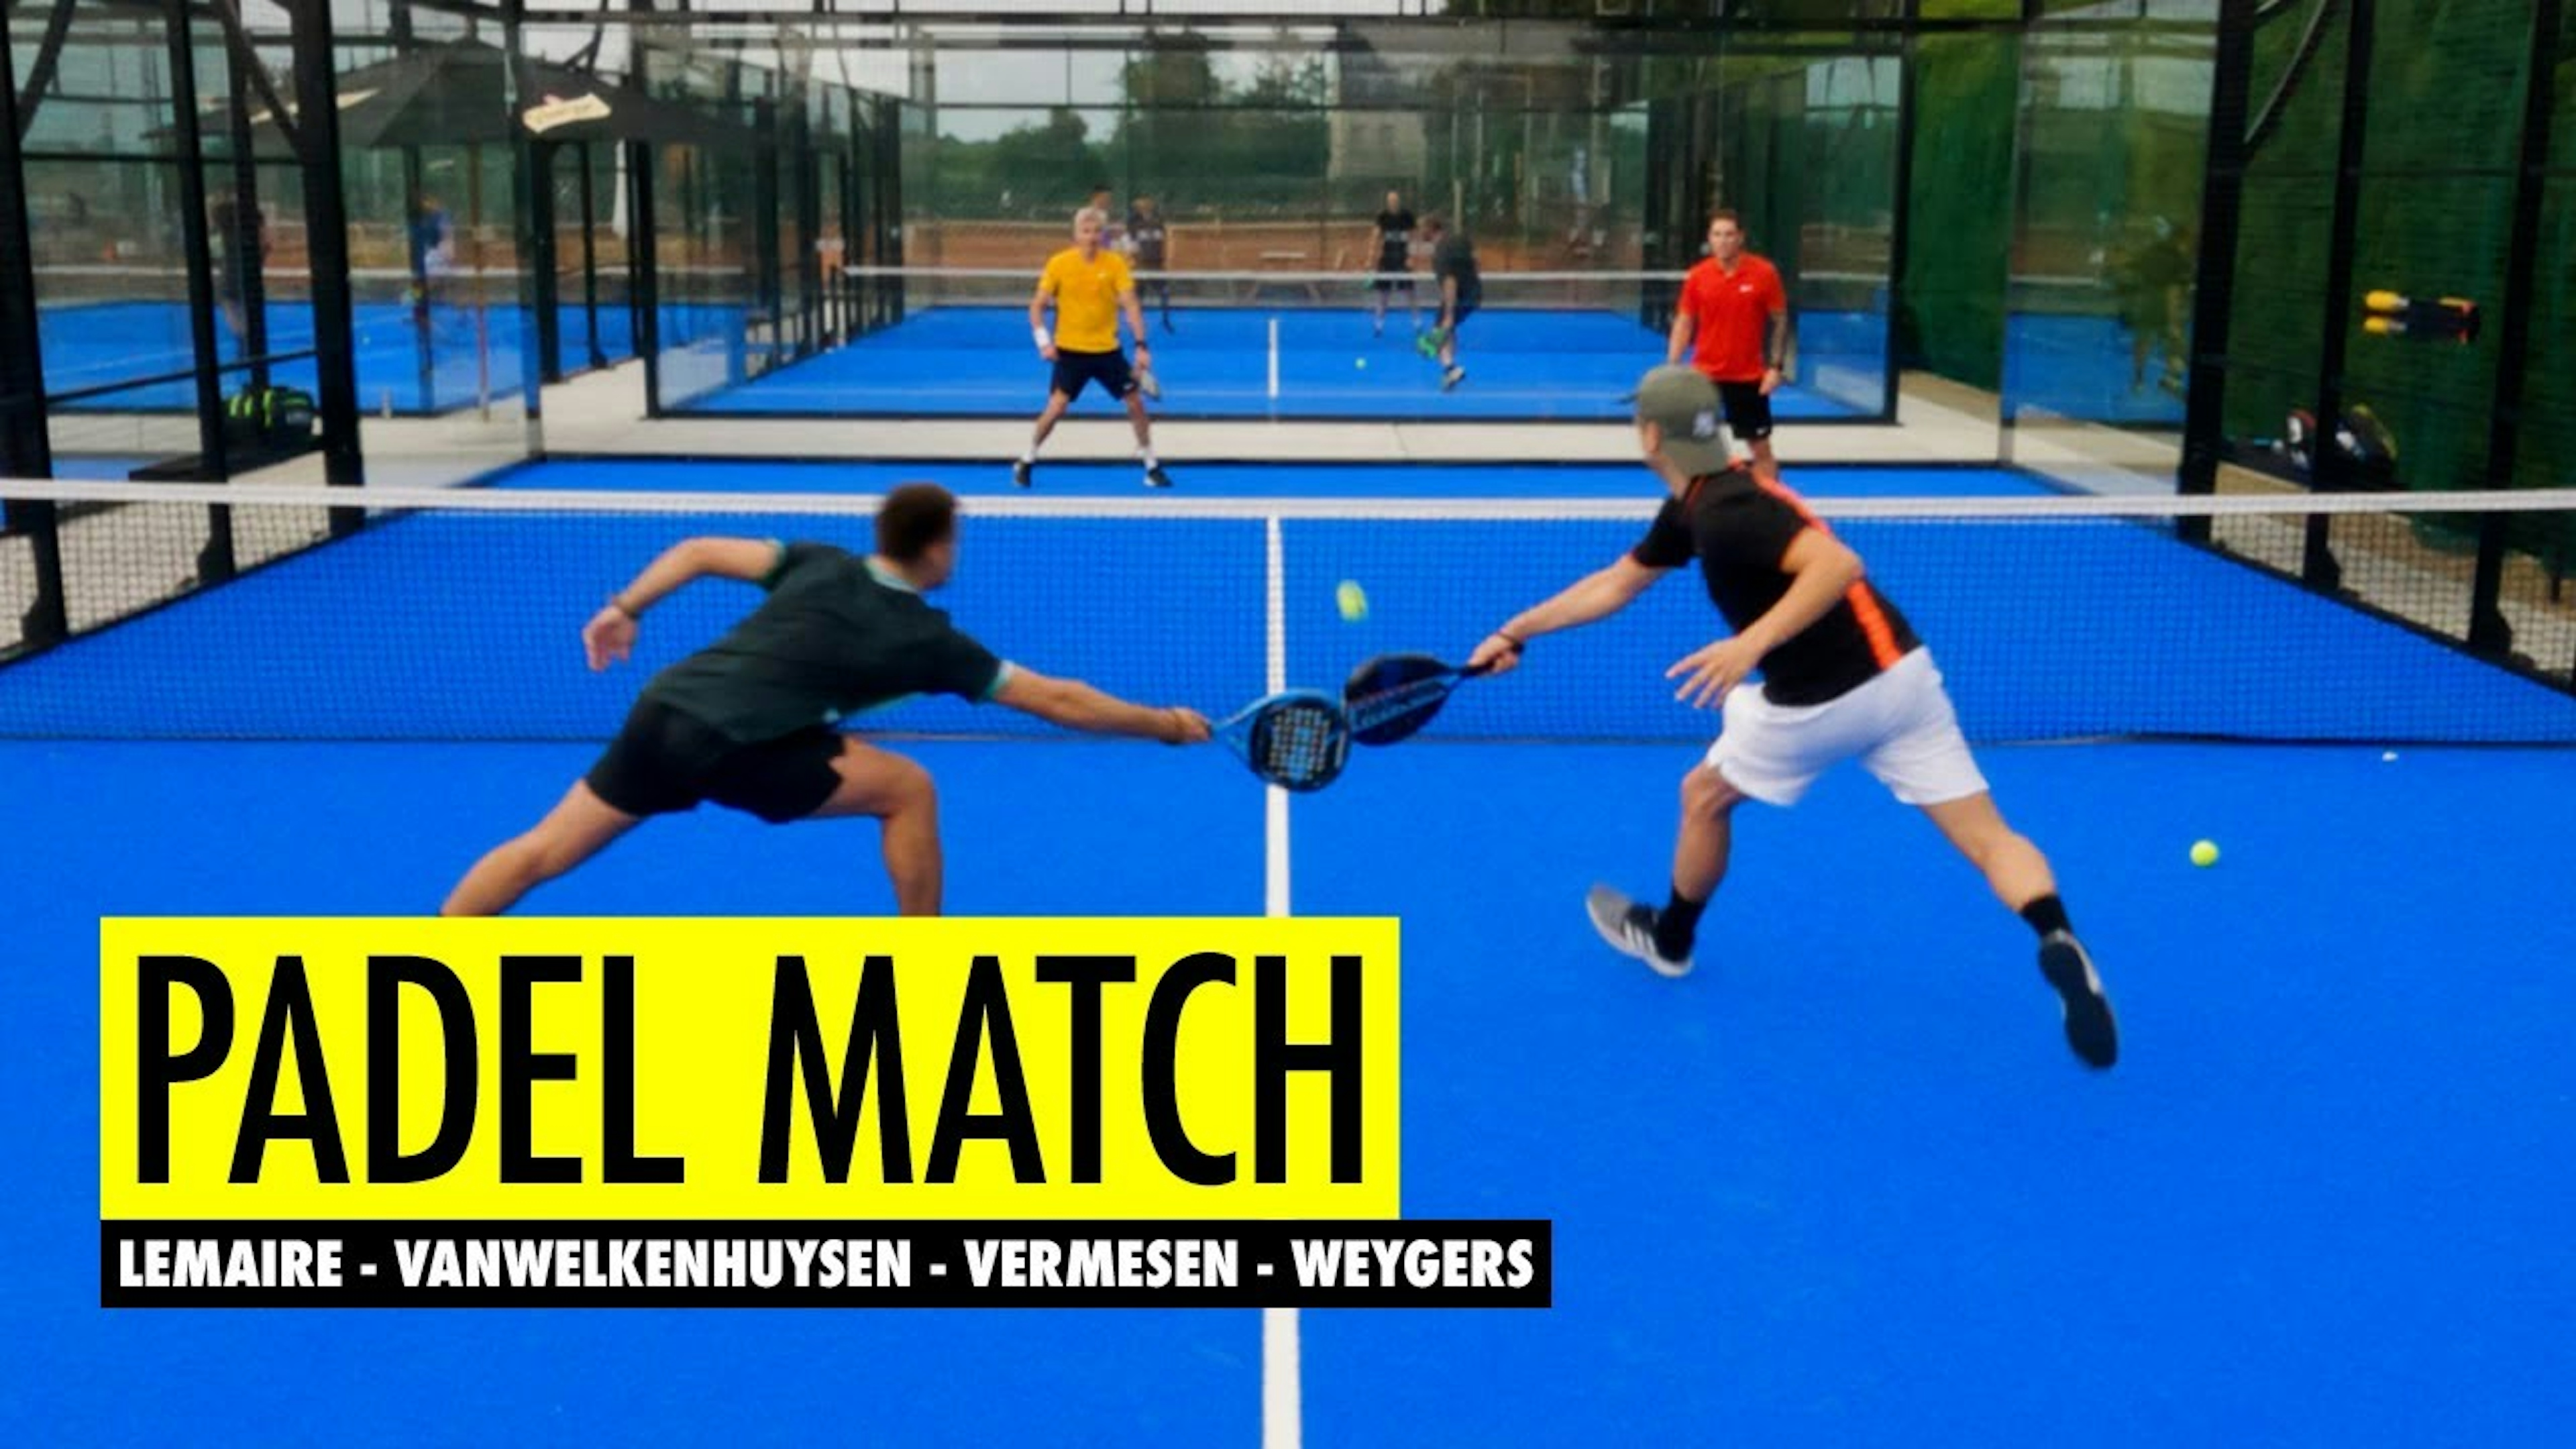 Padel Match: Lemaire - Vanwelkenhuysen - Vermesen - Weygers | Andy Lemaire